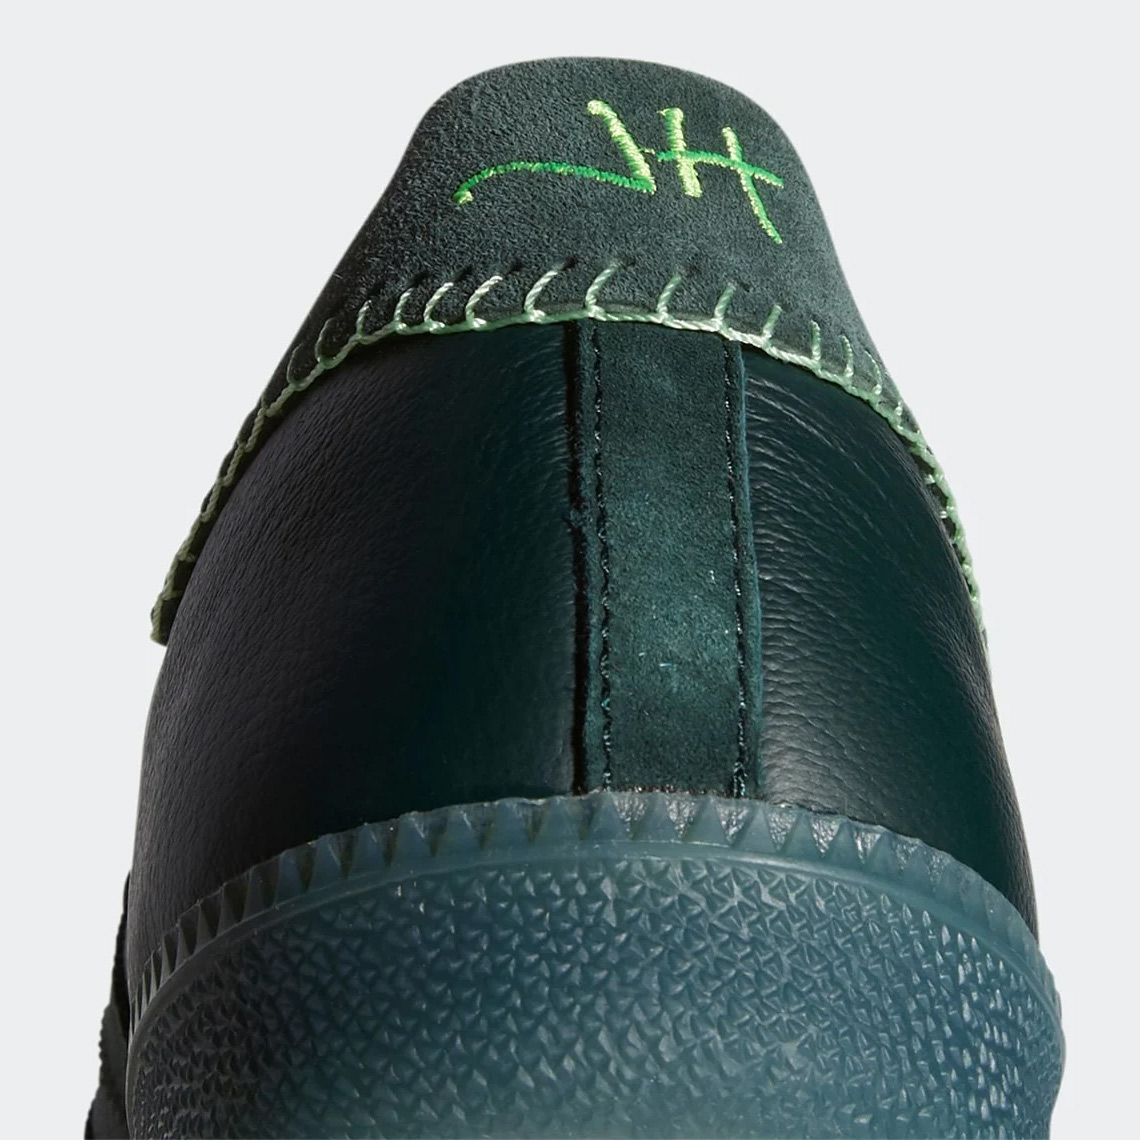 Jonah Hill Adidas Samba Green Fw7458 4